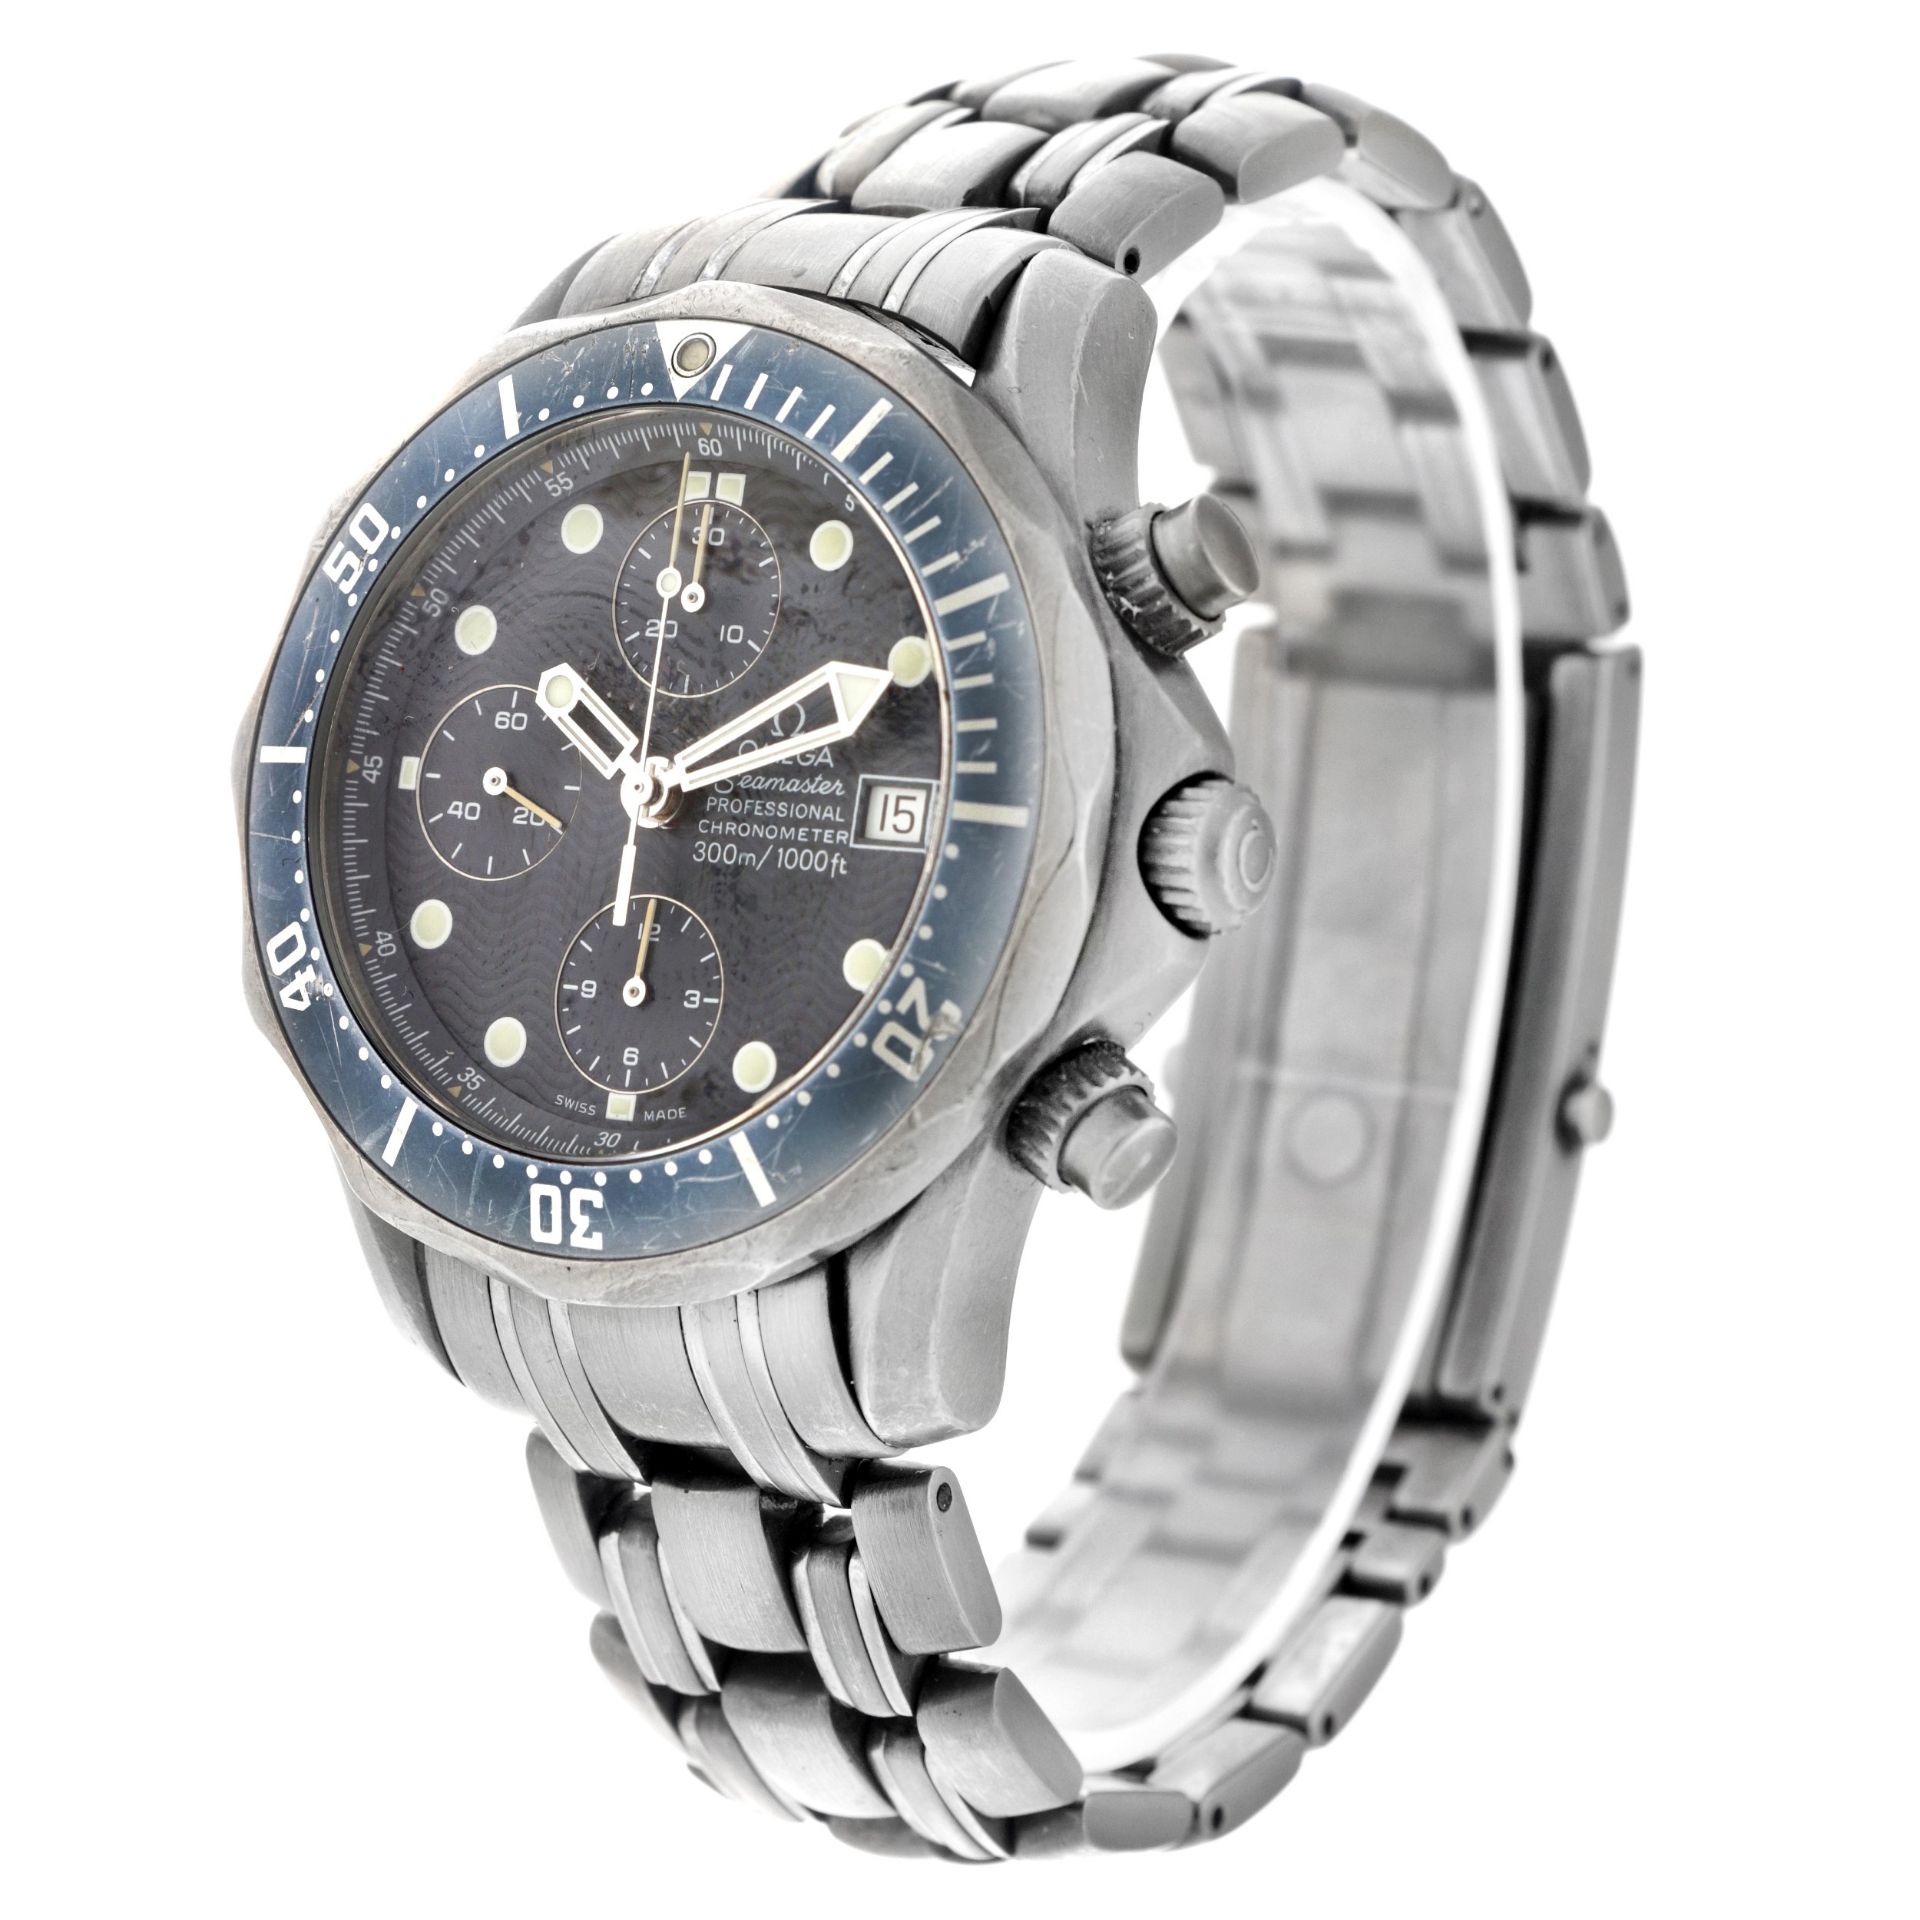 No Reserve - Omega Seamaster Professional 300m Chronograph 22988000 - Men's watch - 1997. - Bild 2 aus 5